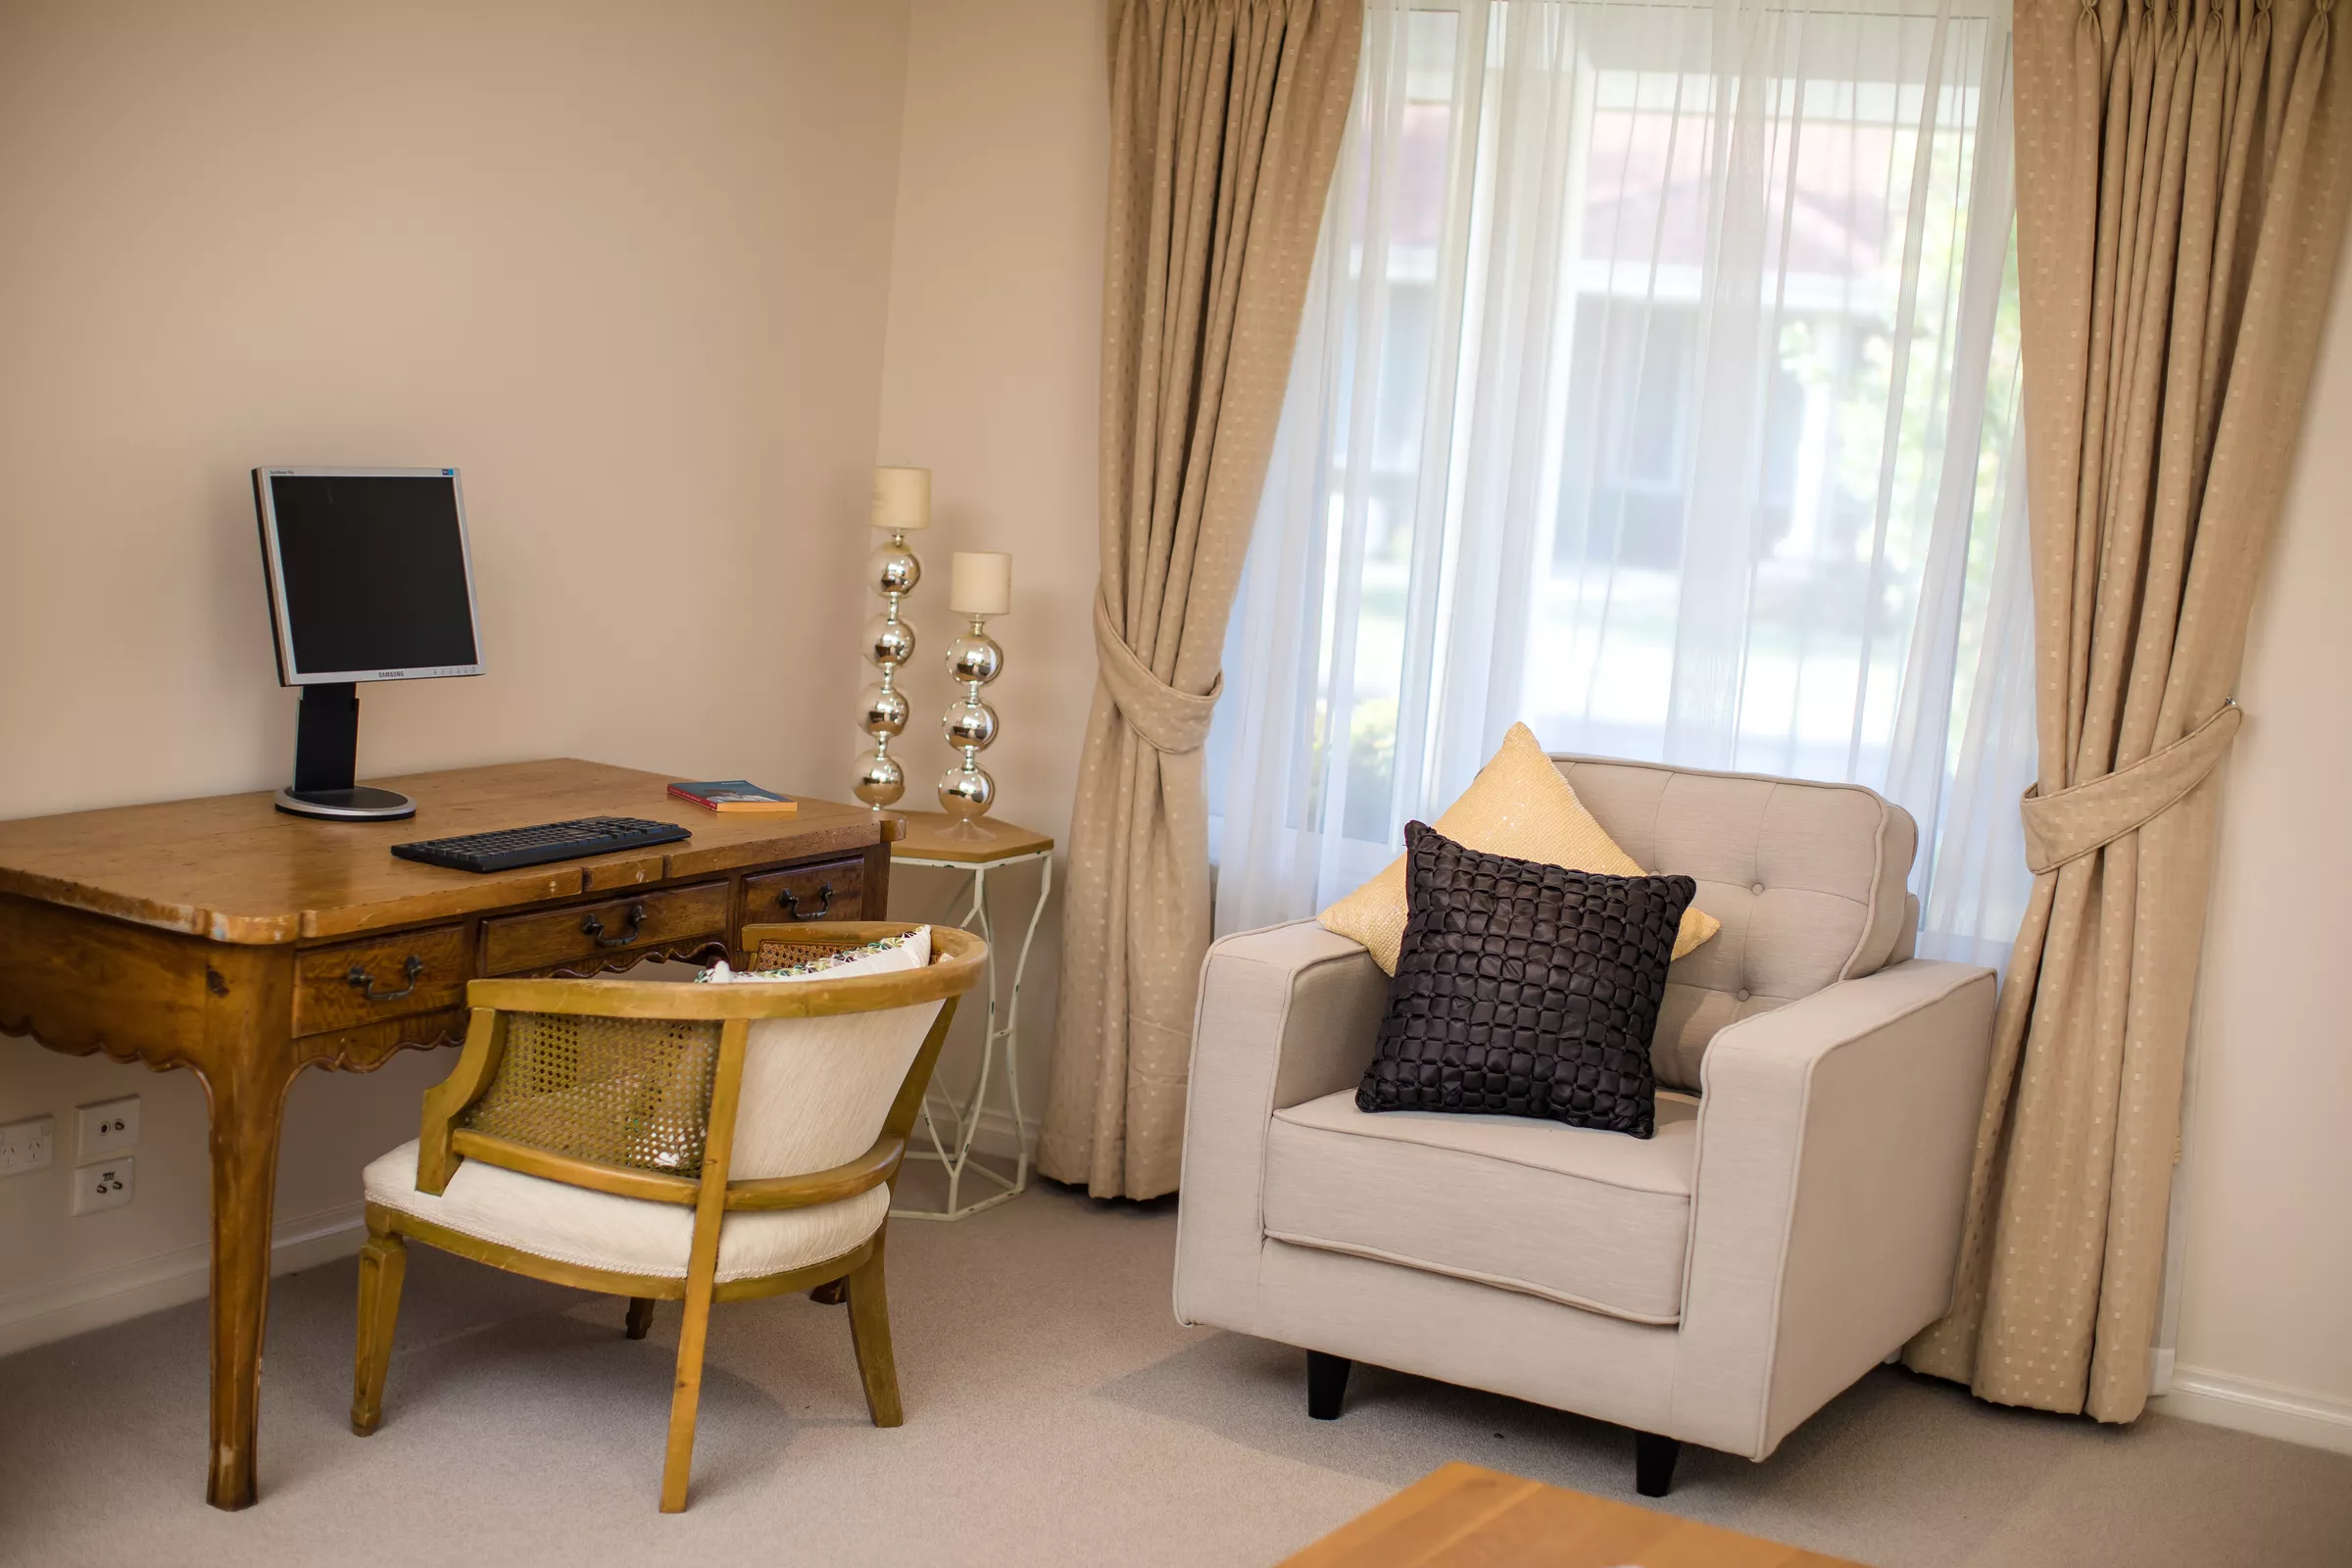 Windsor Park villa study area with desk and armchair